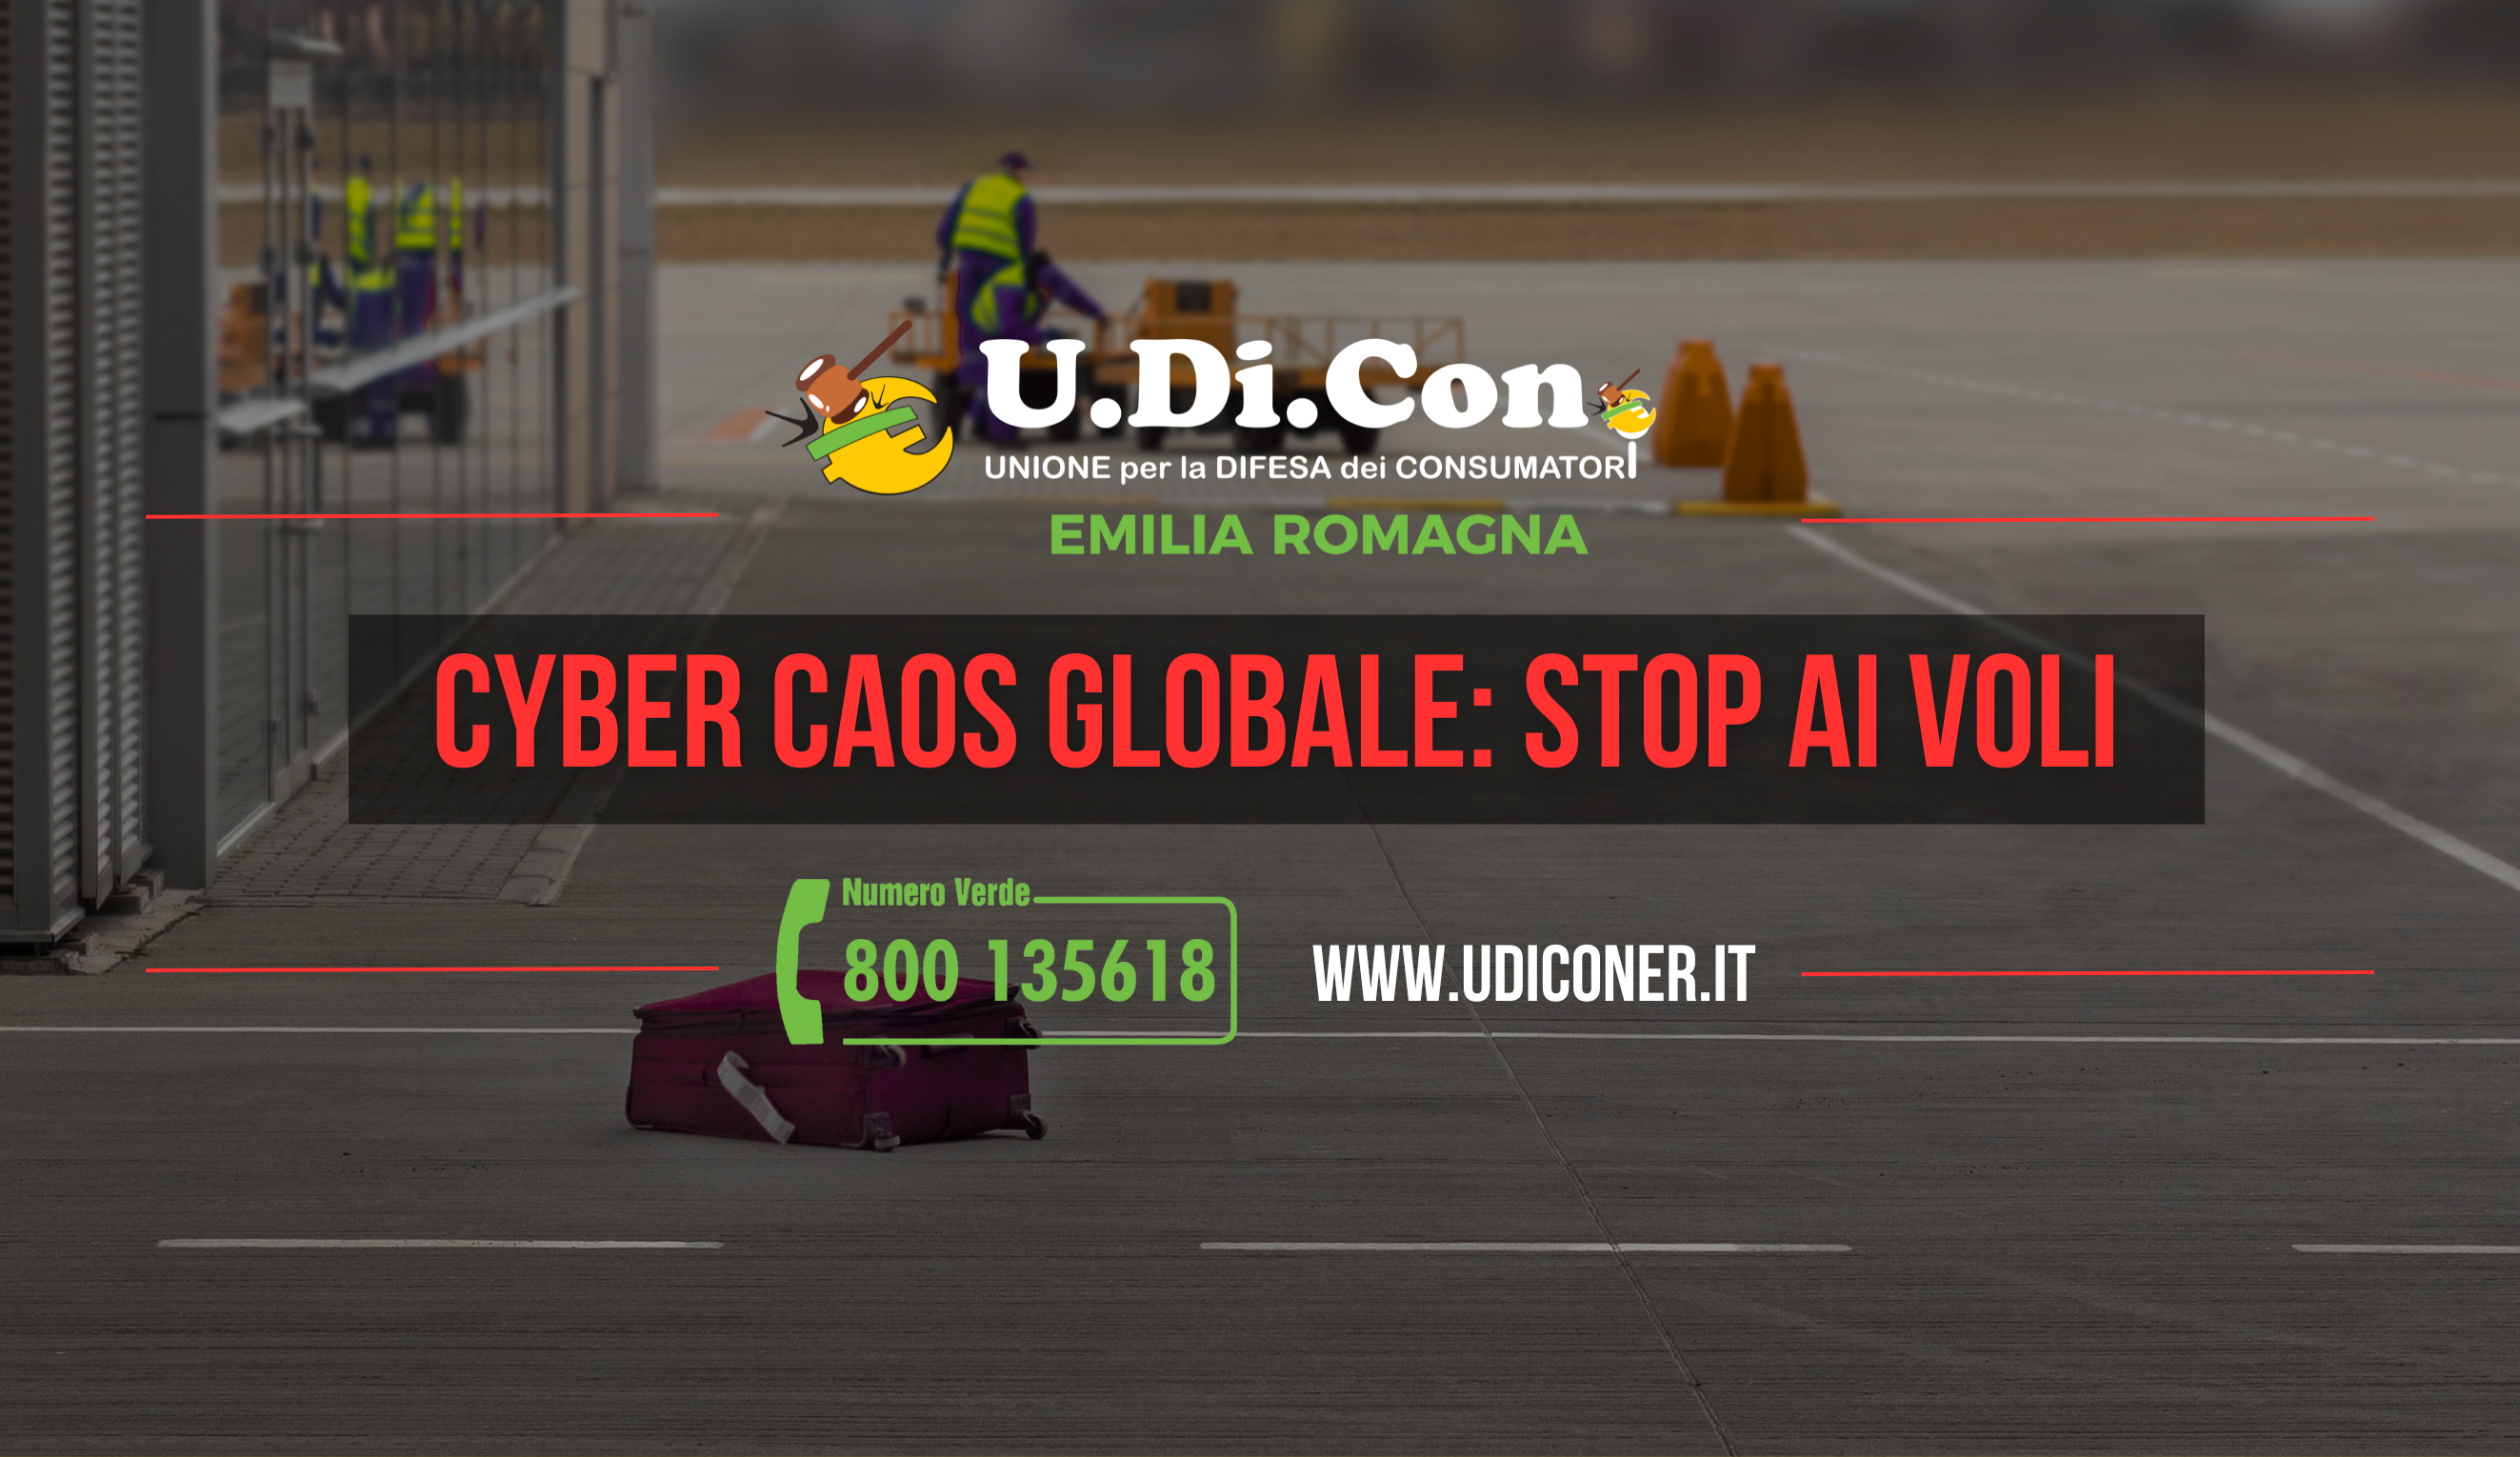 Cyber caos globale: stop ai voli